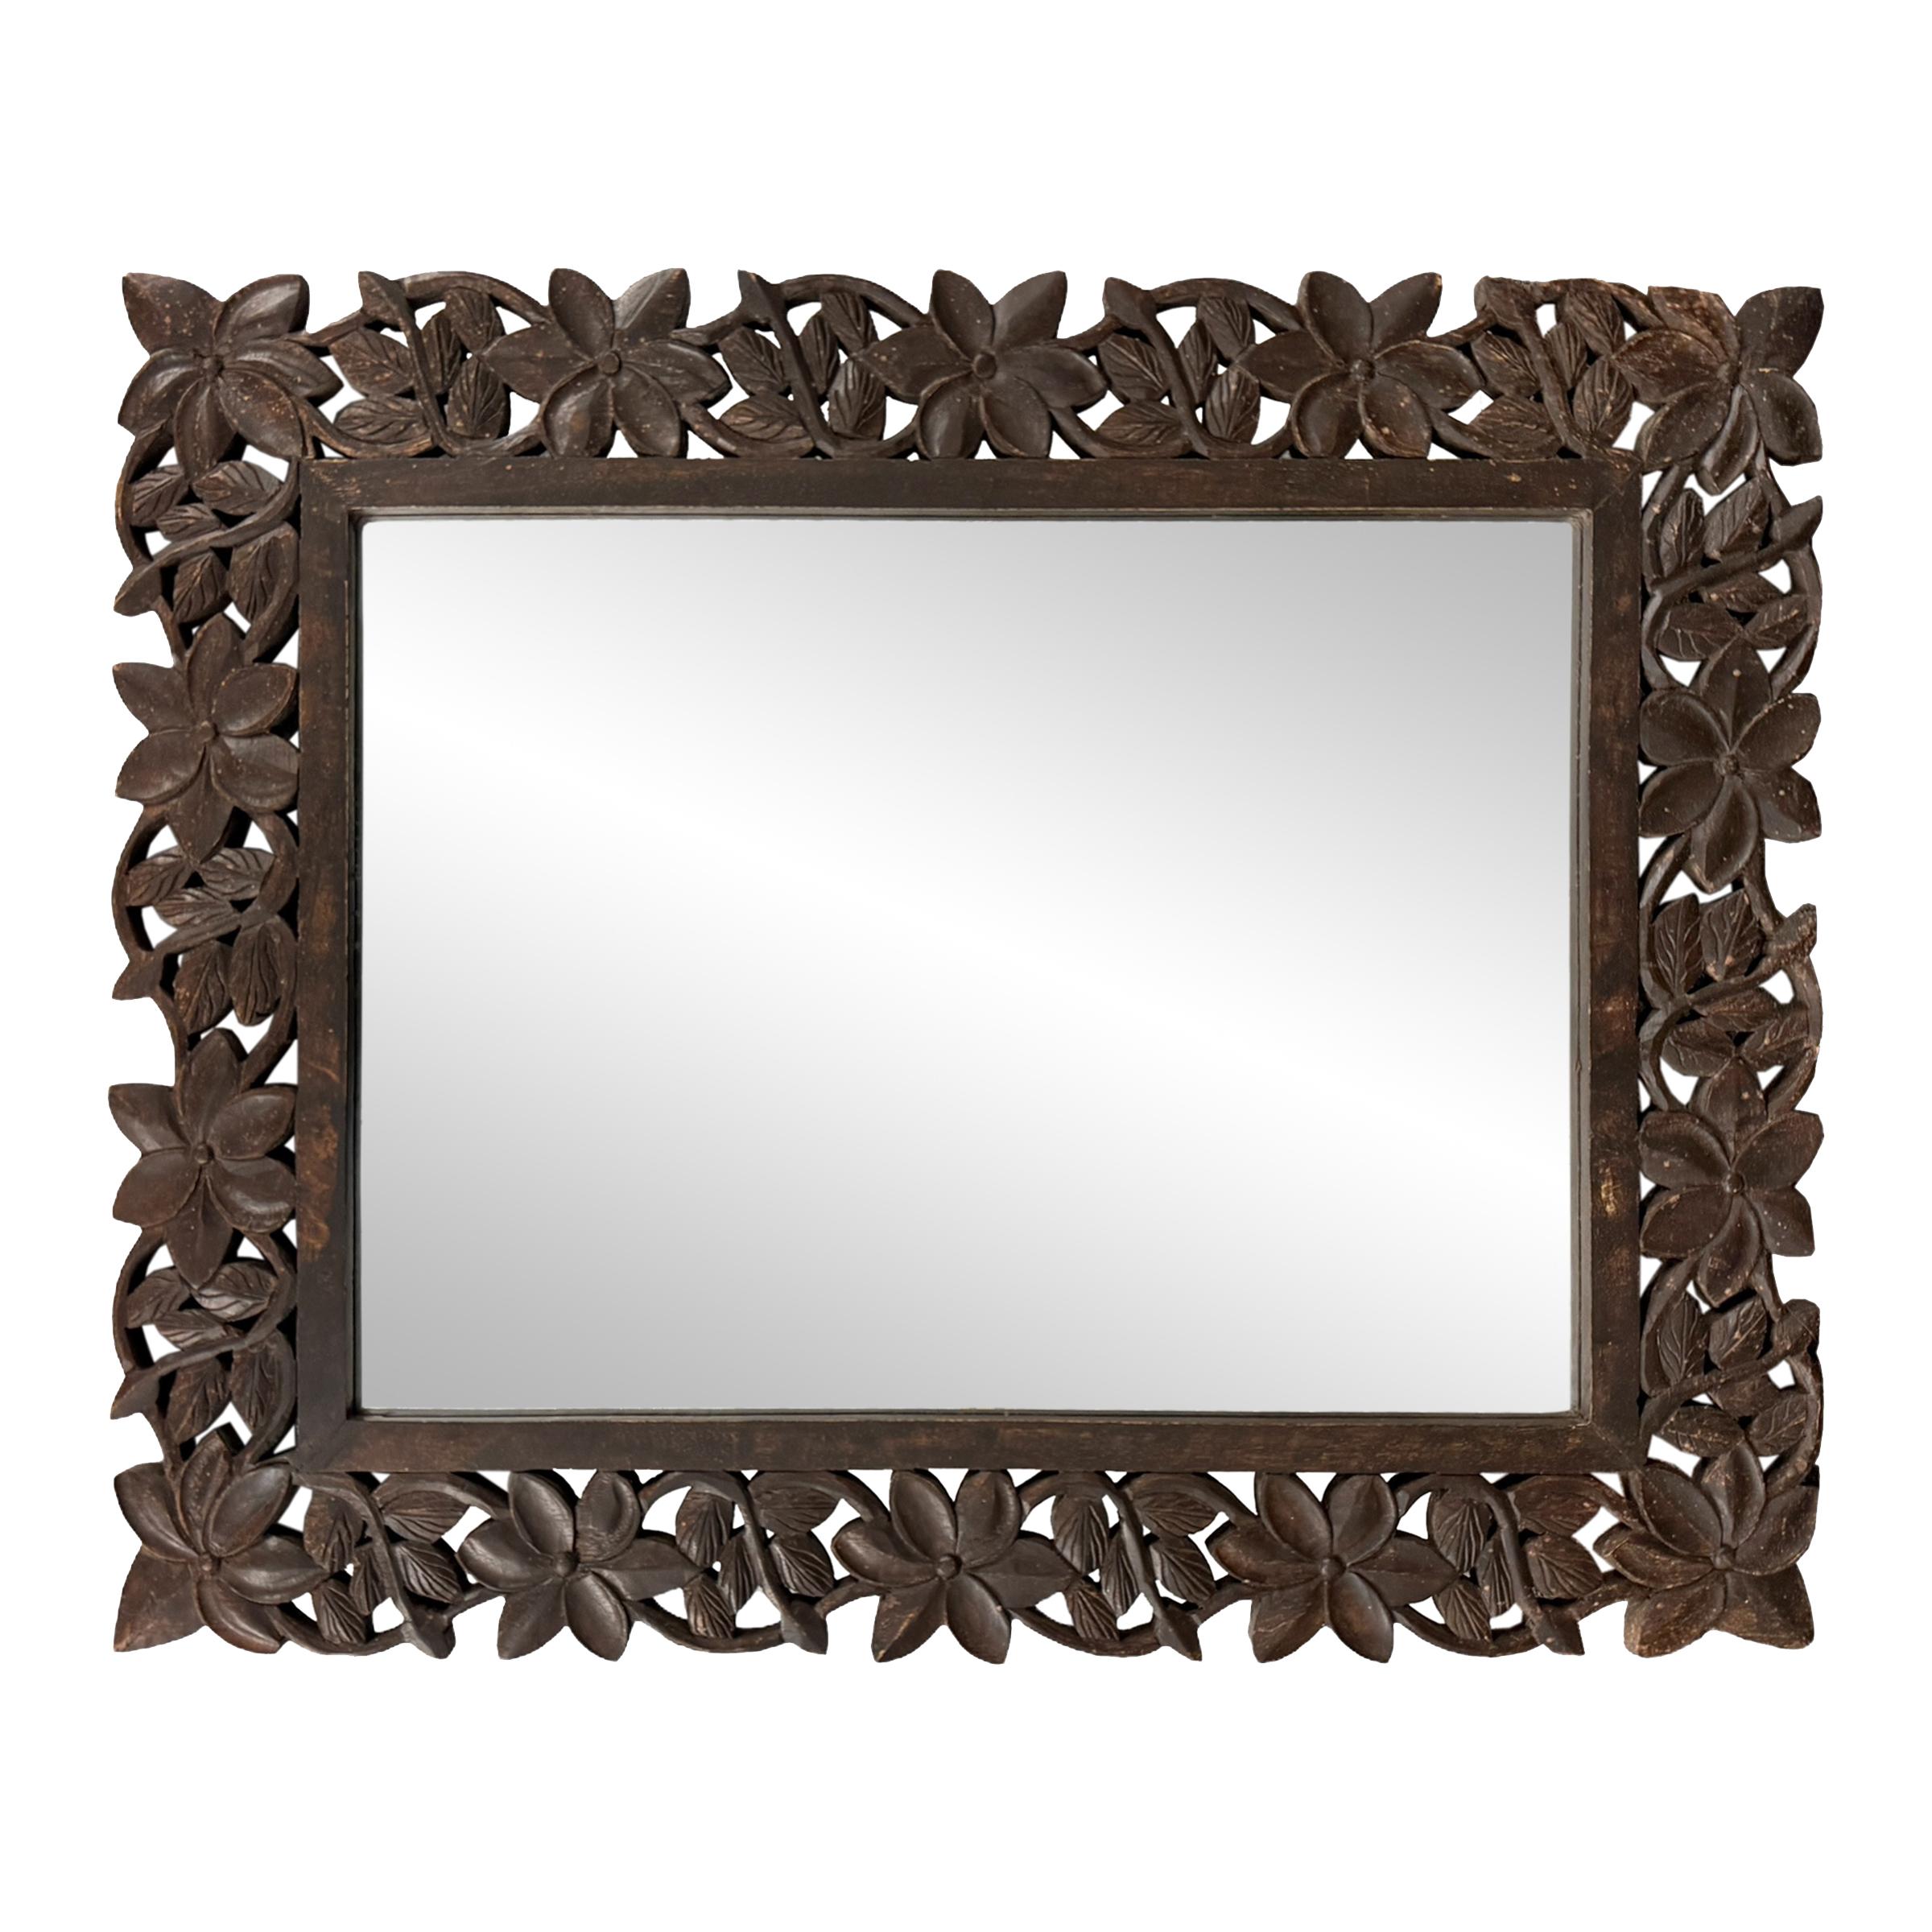 Rustic Hand-Carved Floral Framed Mirror For Sale